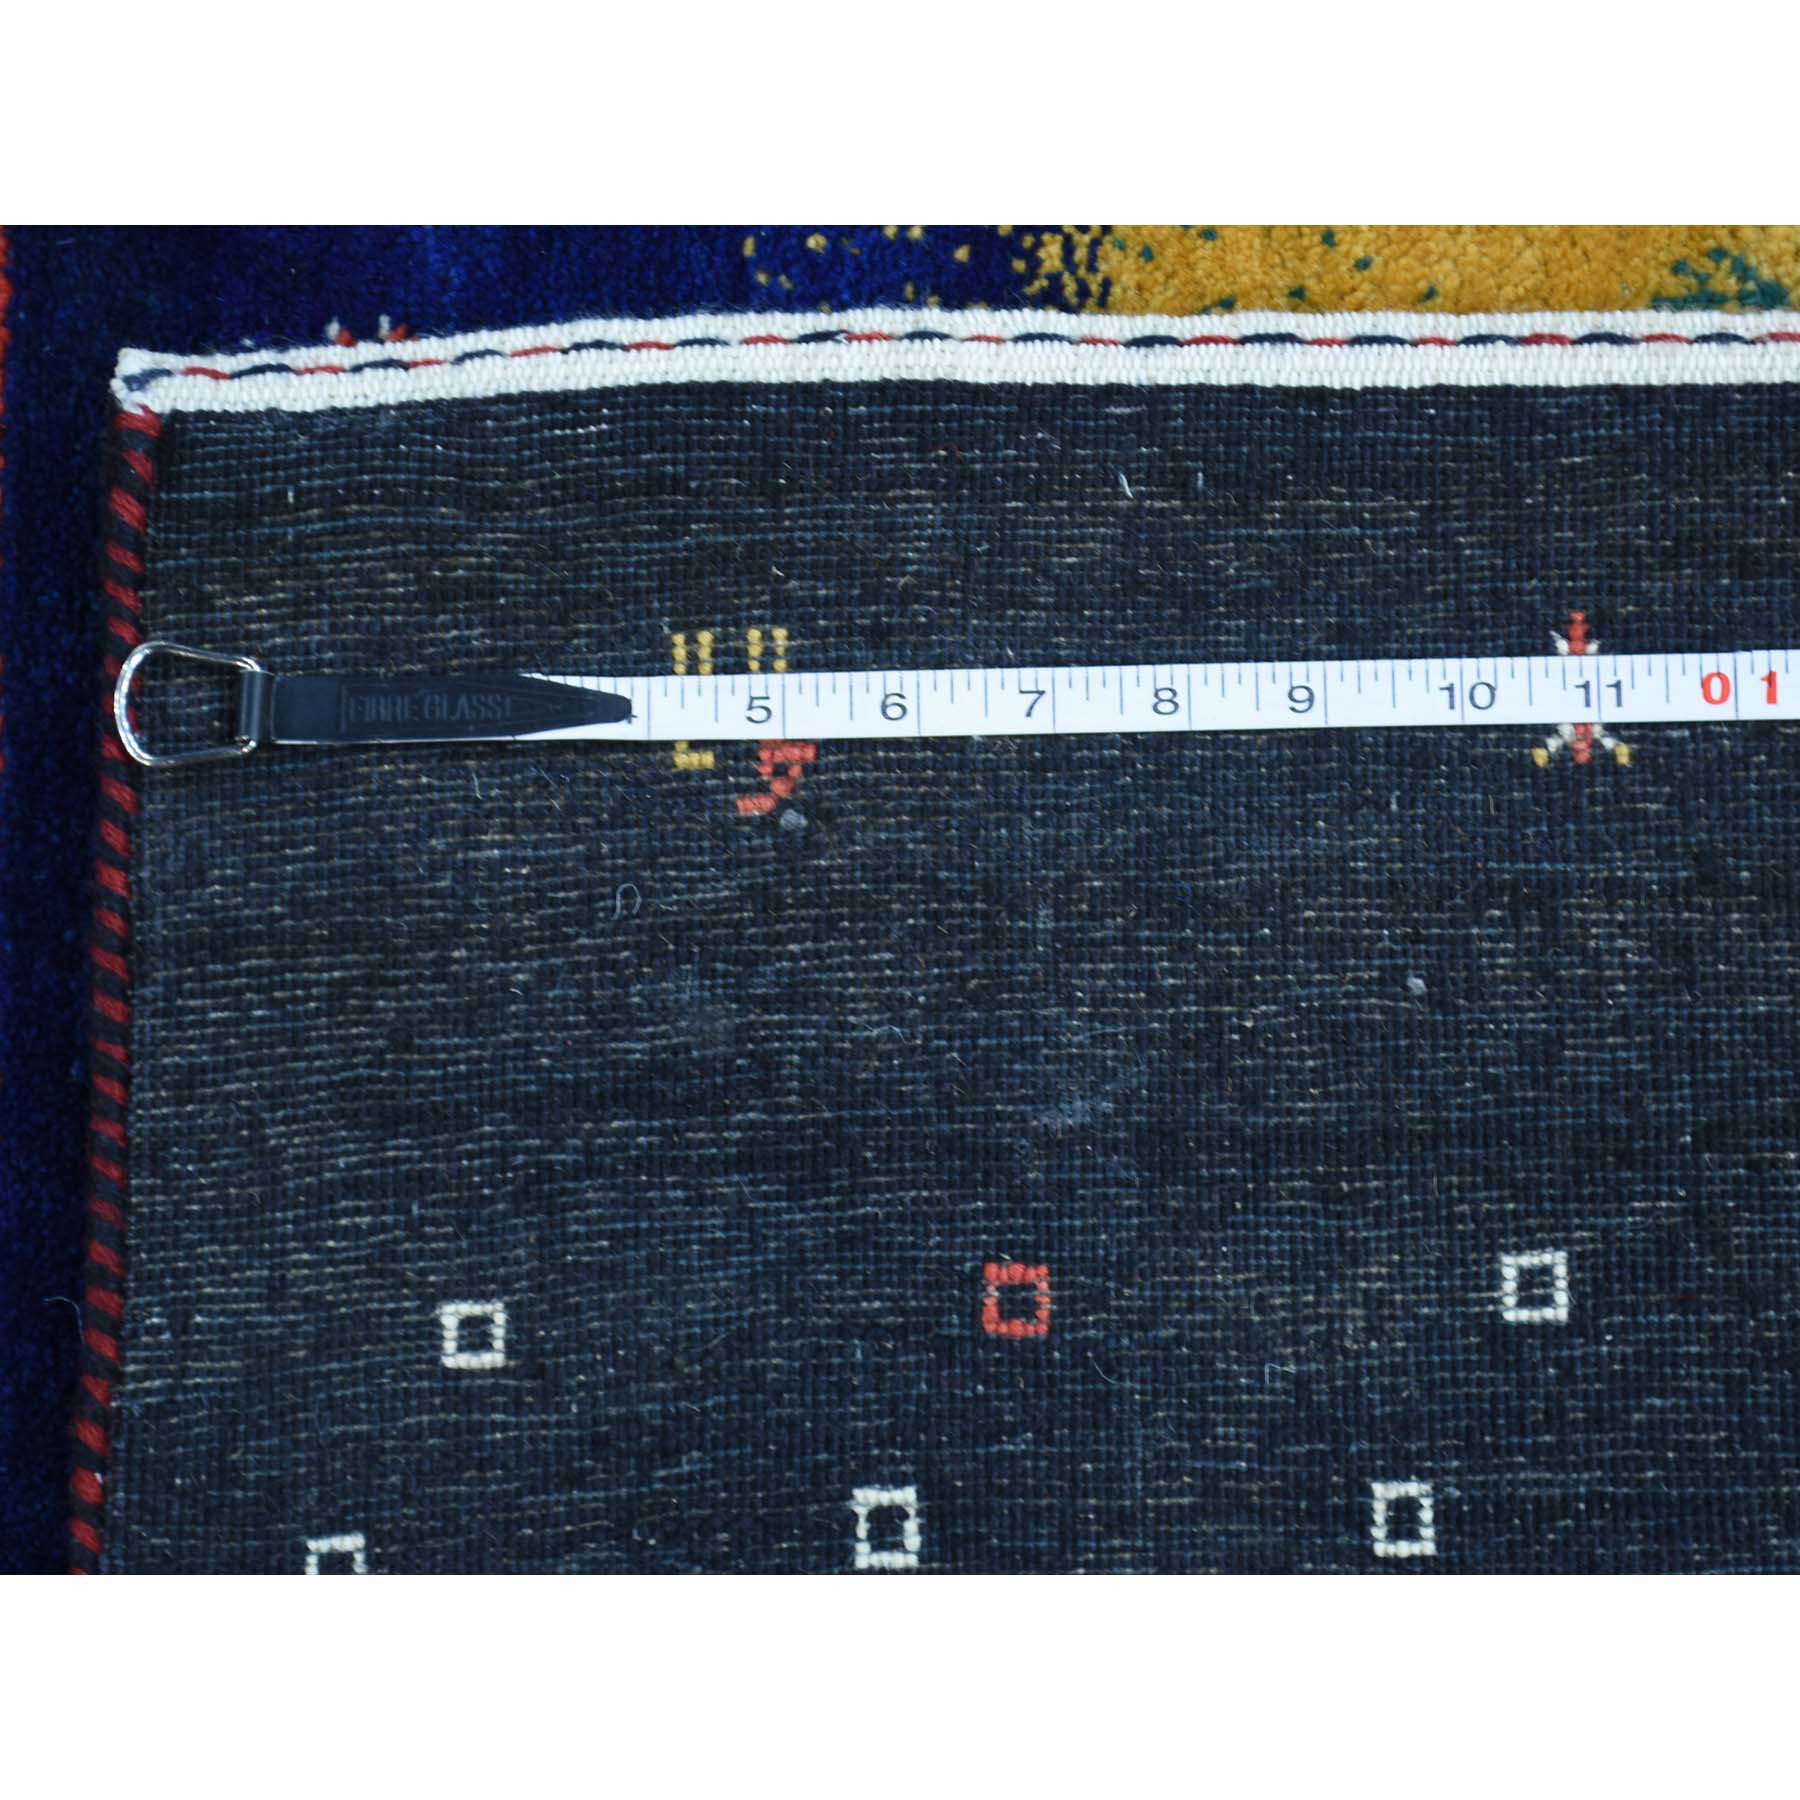 8-1 x9-9  100 Percent Wool Hand-Knotted Folk Art Gabbeh Oriental Rug 